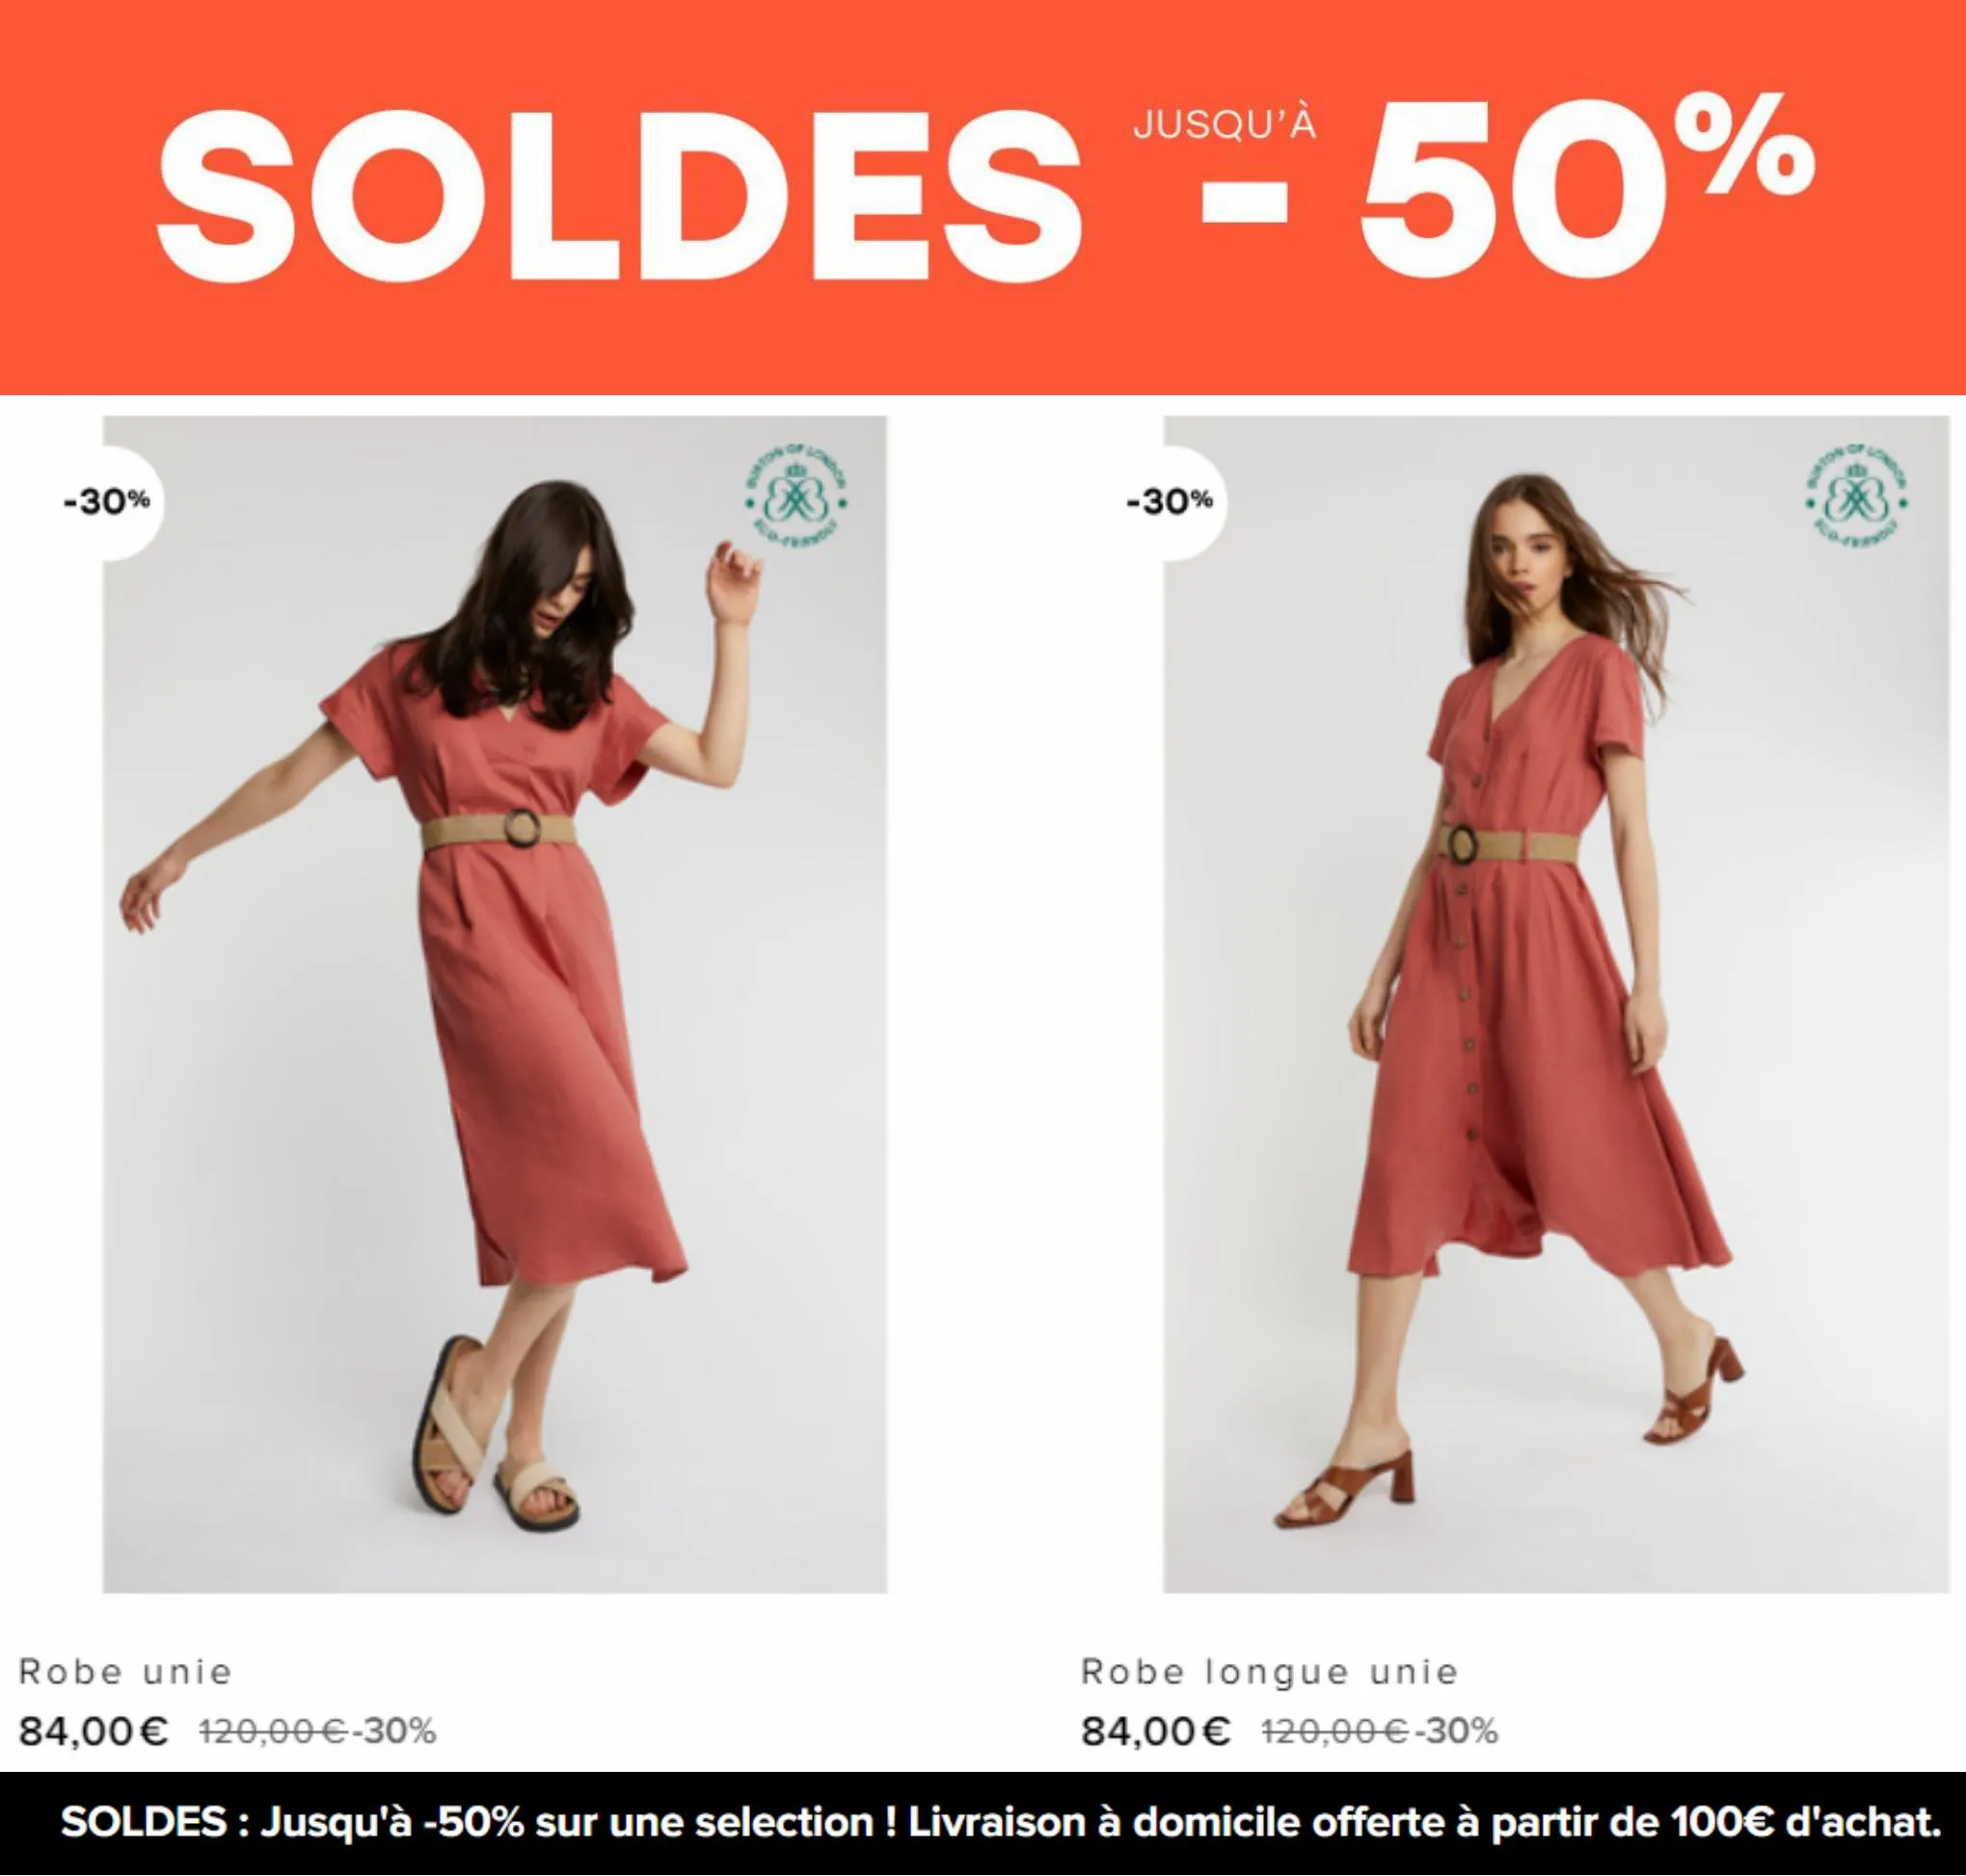 Catalogue Soldes -50% Femme, page 00004